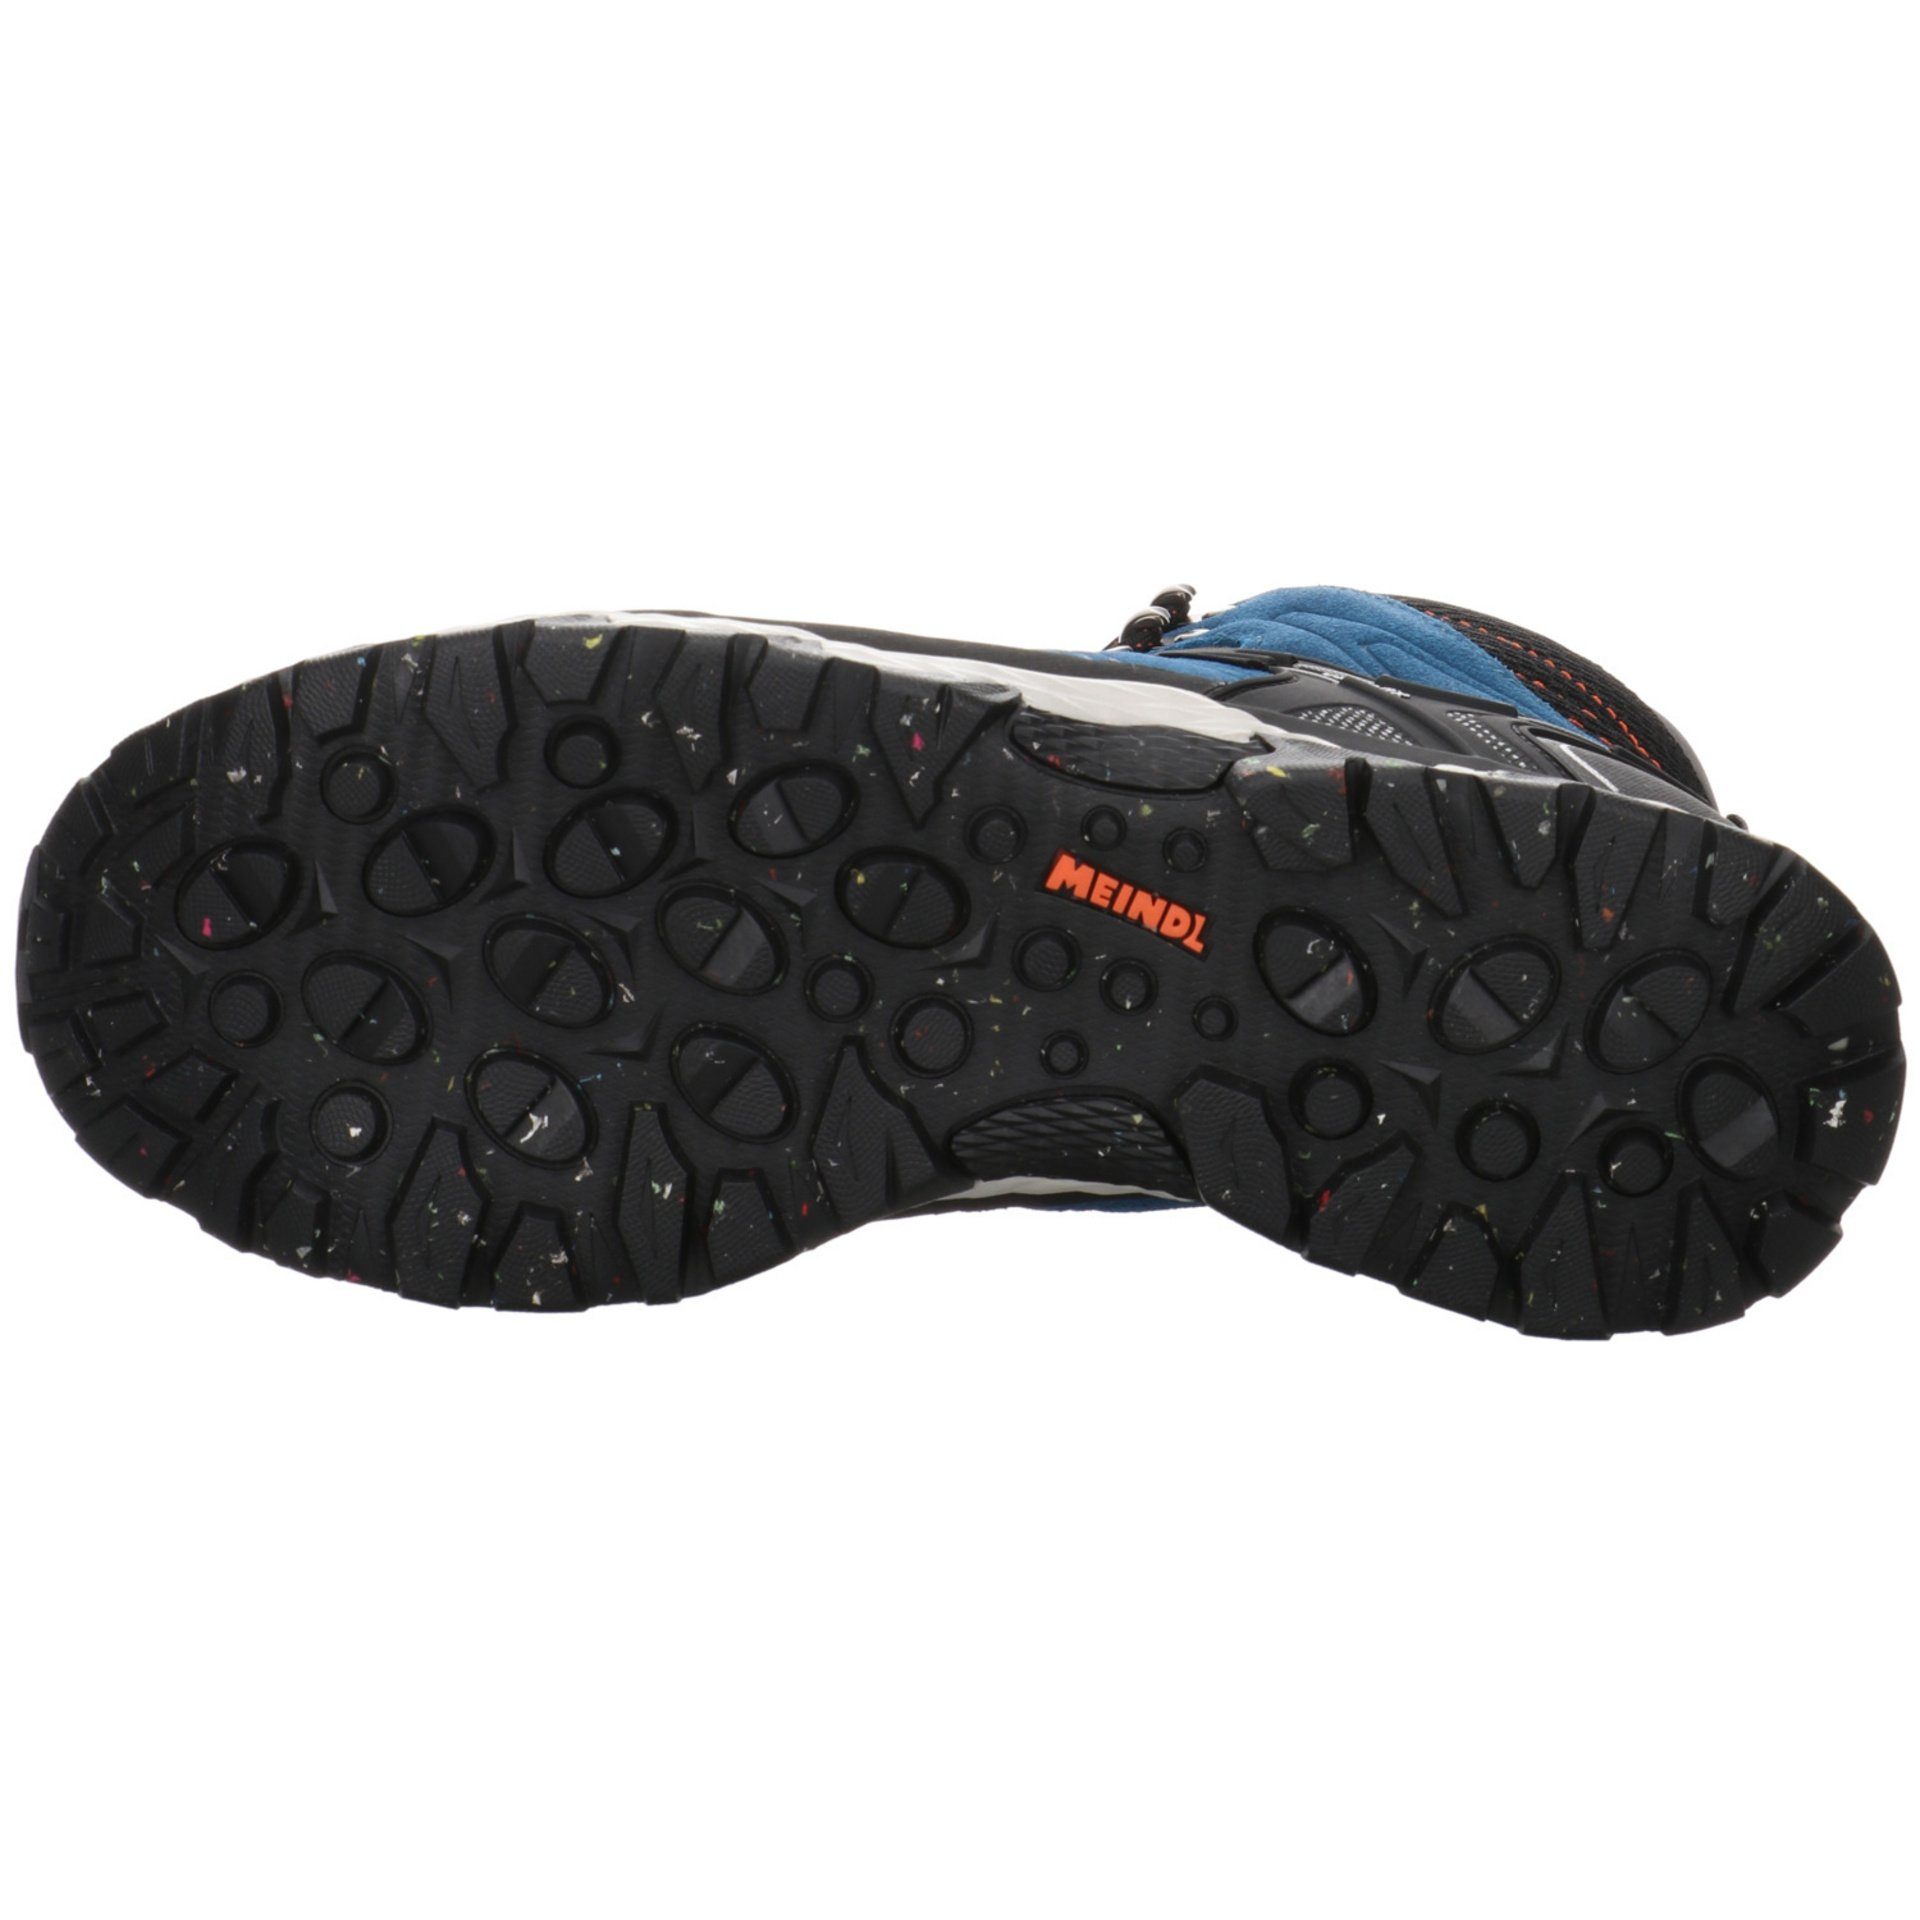 GTX Lite Outdoorschuh Hike Leder-/Textilkombination Outdoor blau/orange Meindl Outdoorschuh Schuhe Herren